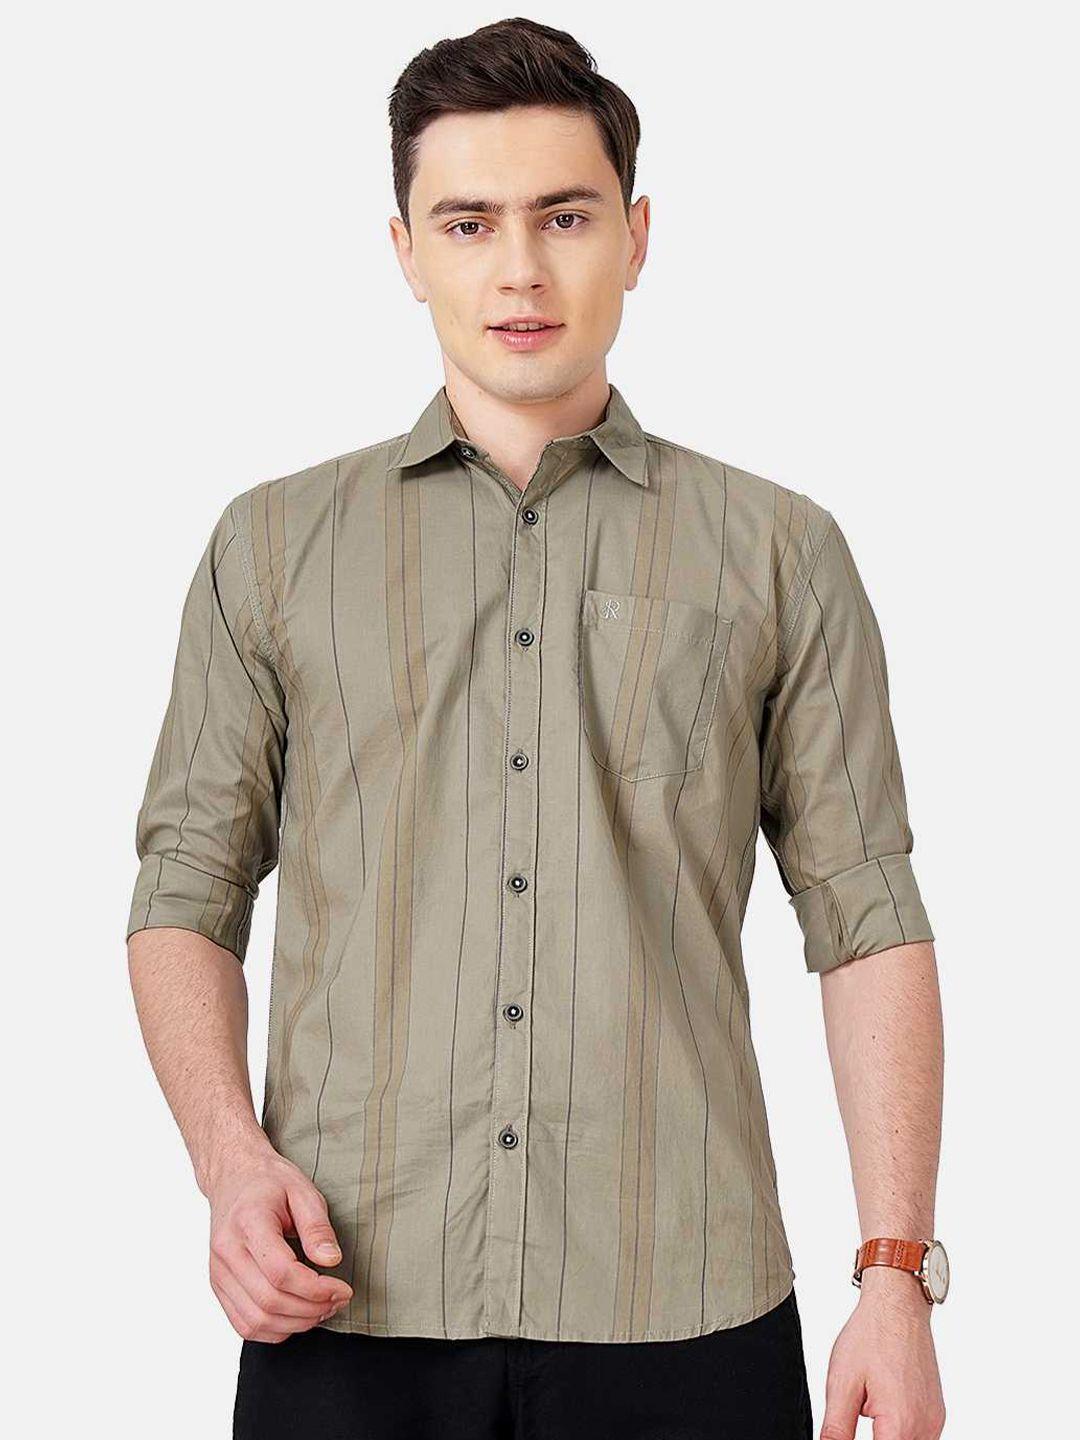 soratia-men-slim-fit-striped-casual-cotton-shirt